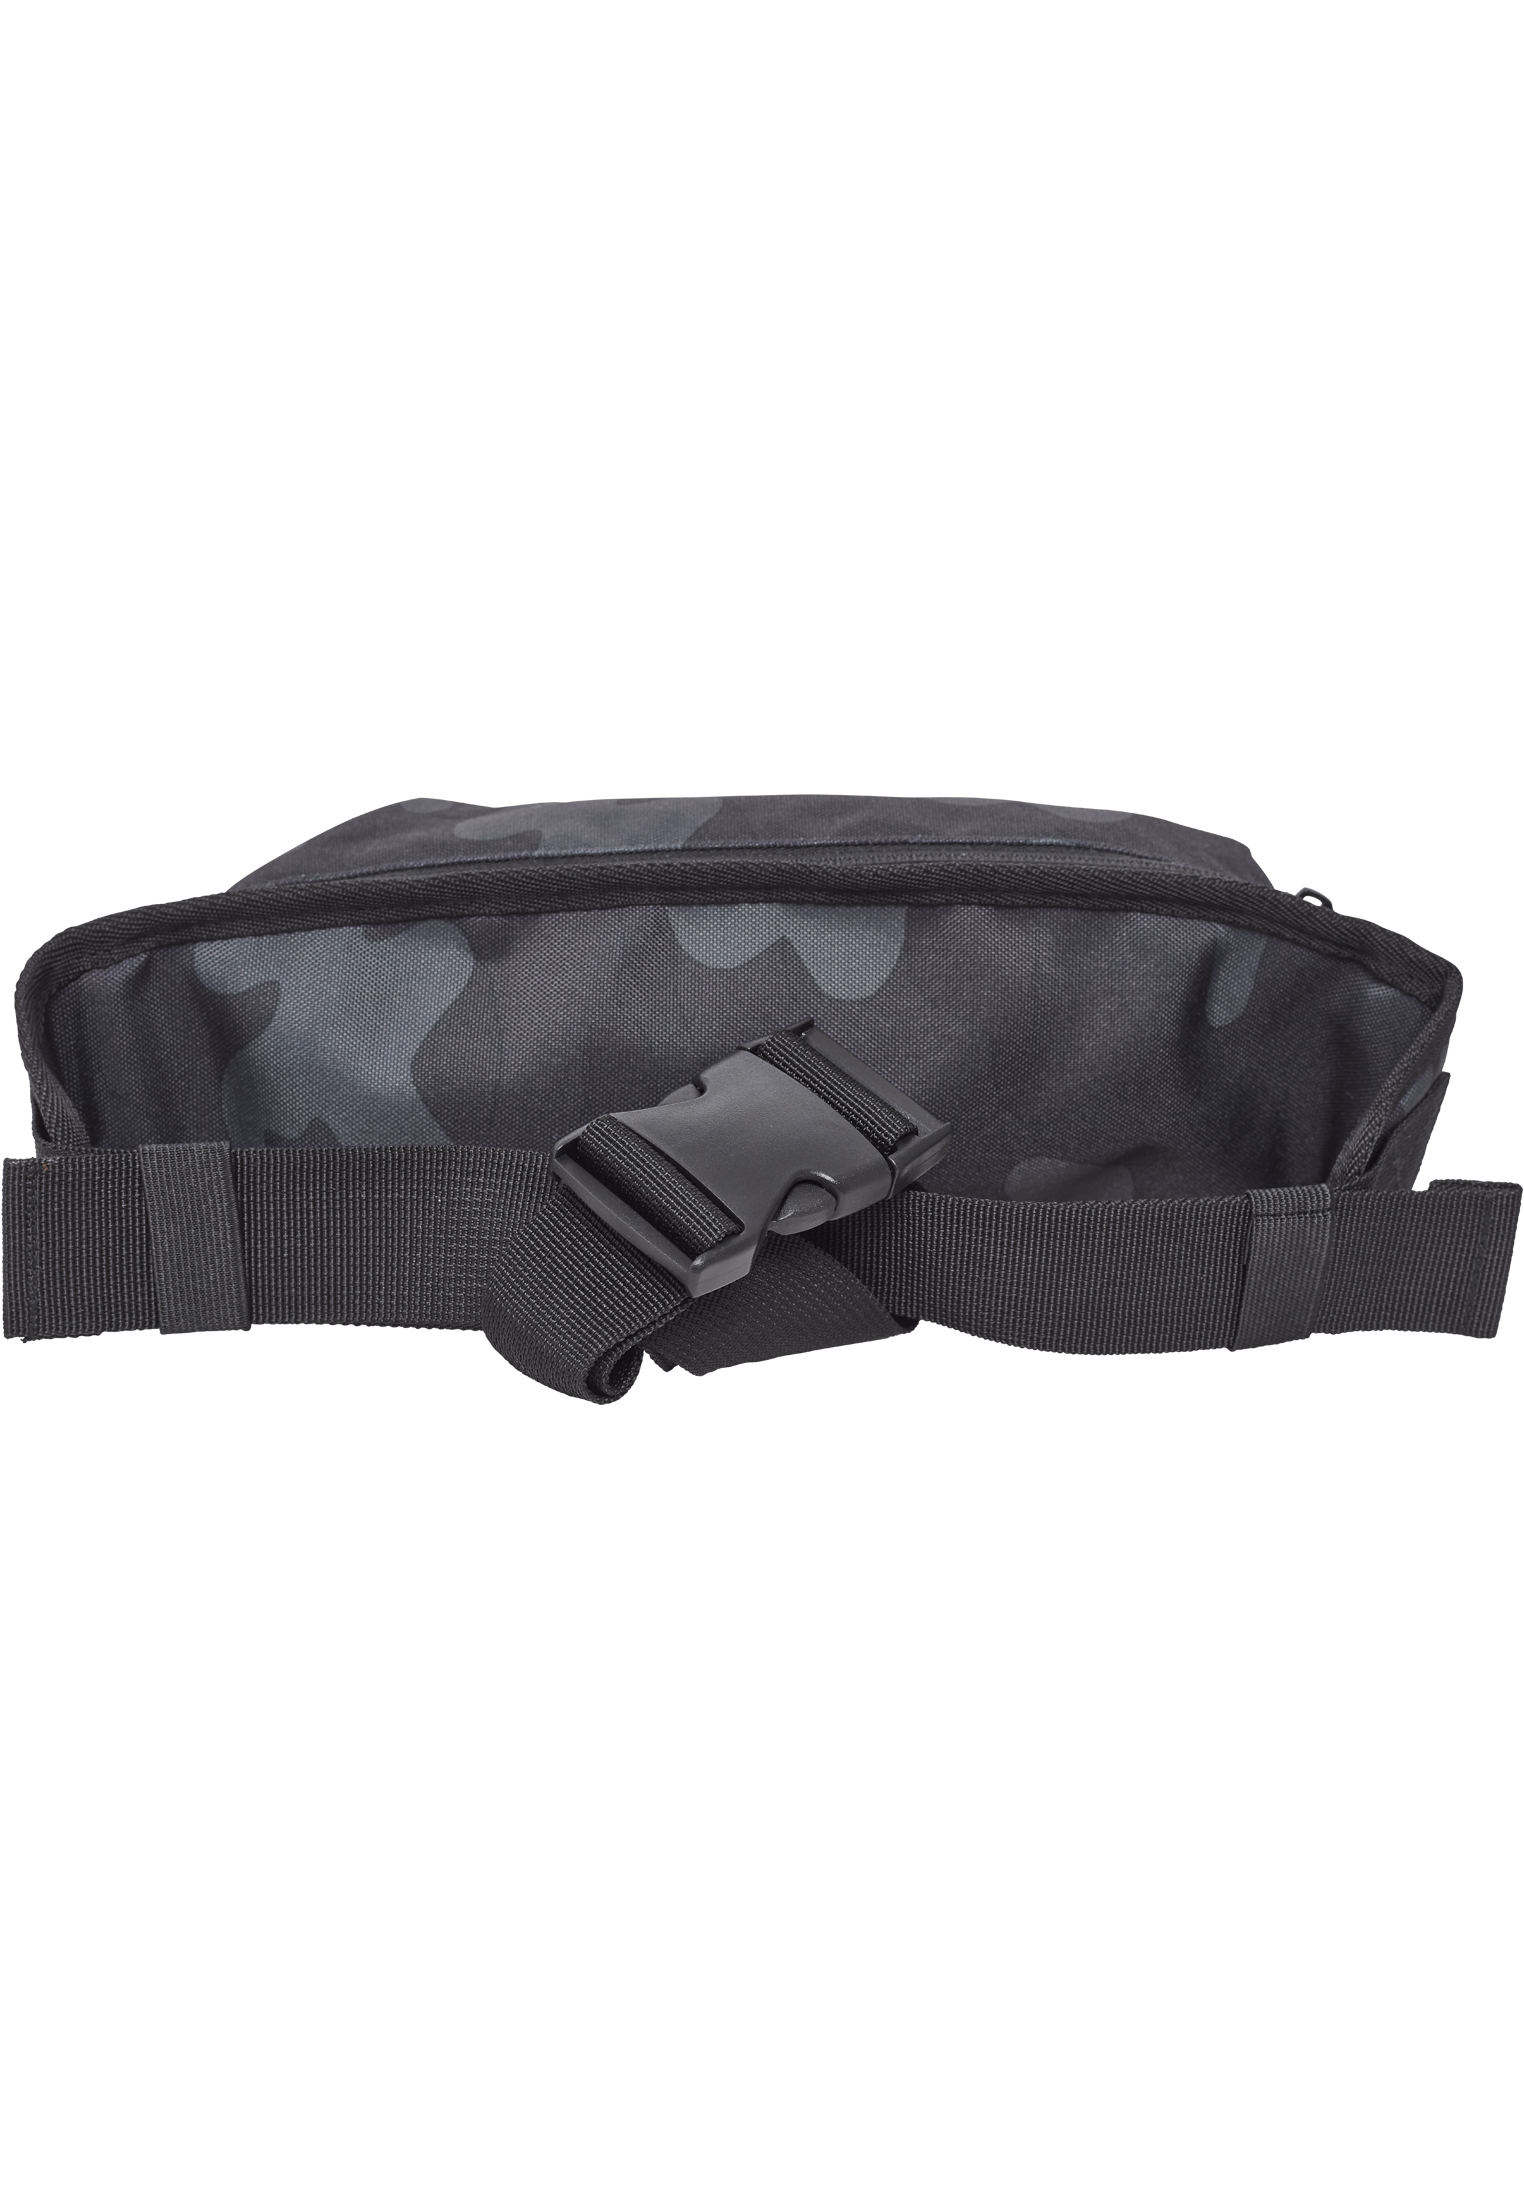 Taschen Camo Shoulder Bag in Farbe dark camo